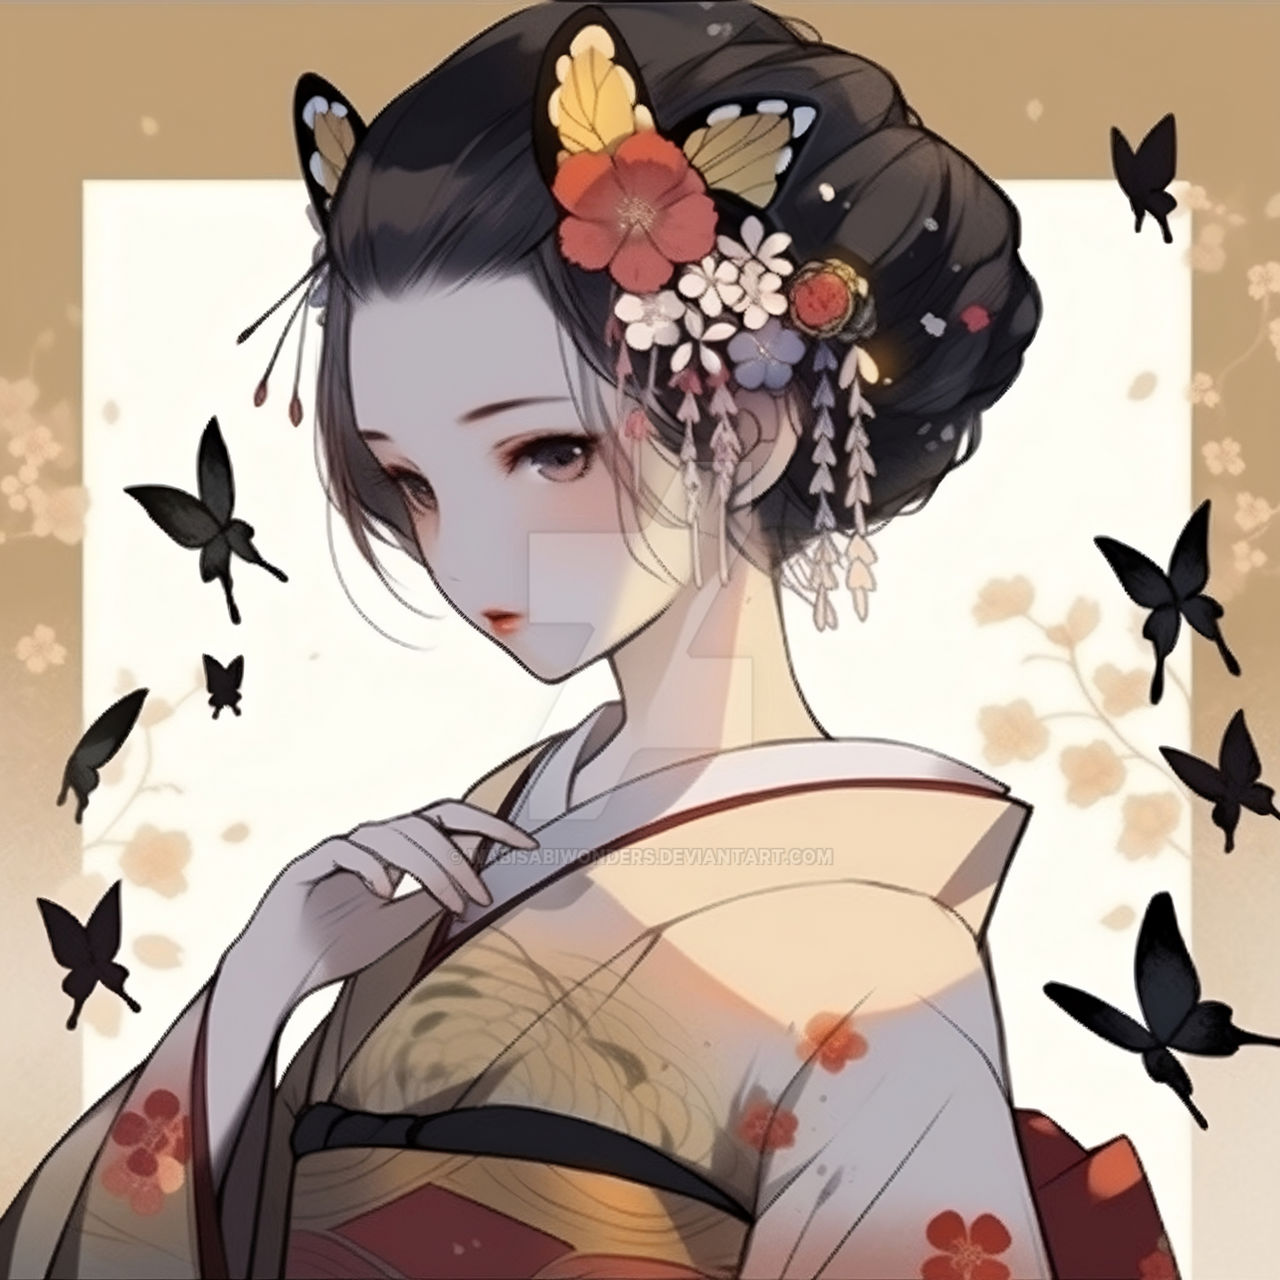 Lady Geisha by WabiSabiWonders on DeviantArt